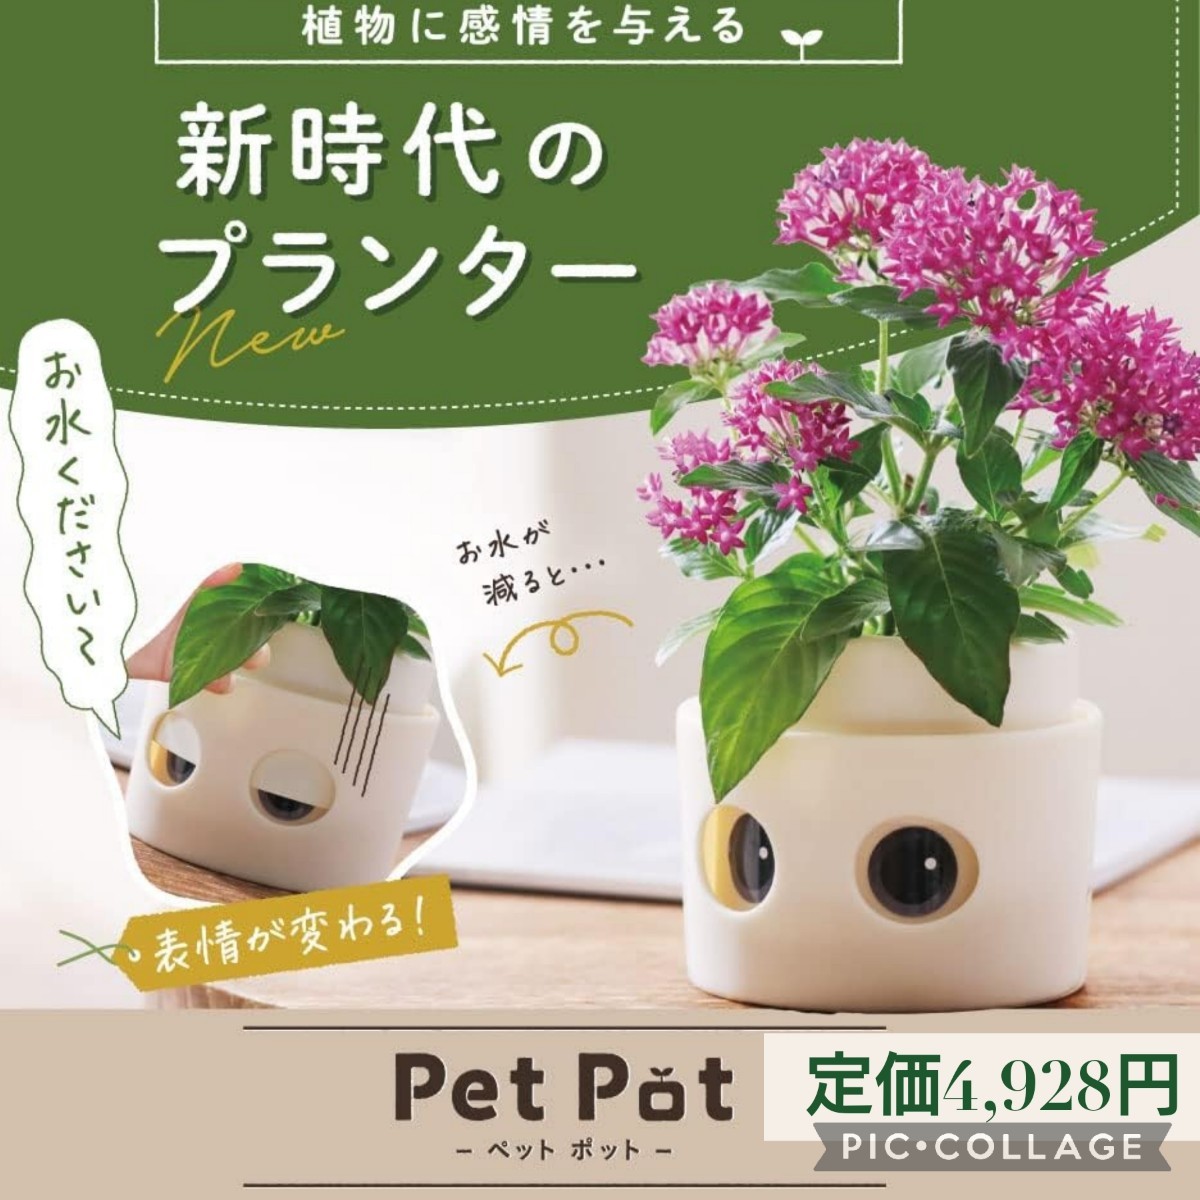  new goods * regular price 4,928 jpy Pet Pot pet pot expression . changes new era. planter plant watering kitchen garden gardening decorative plant plant pot Ame pra 